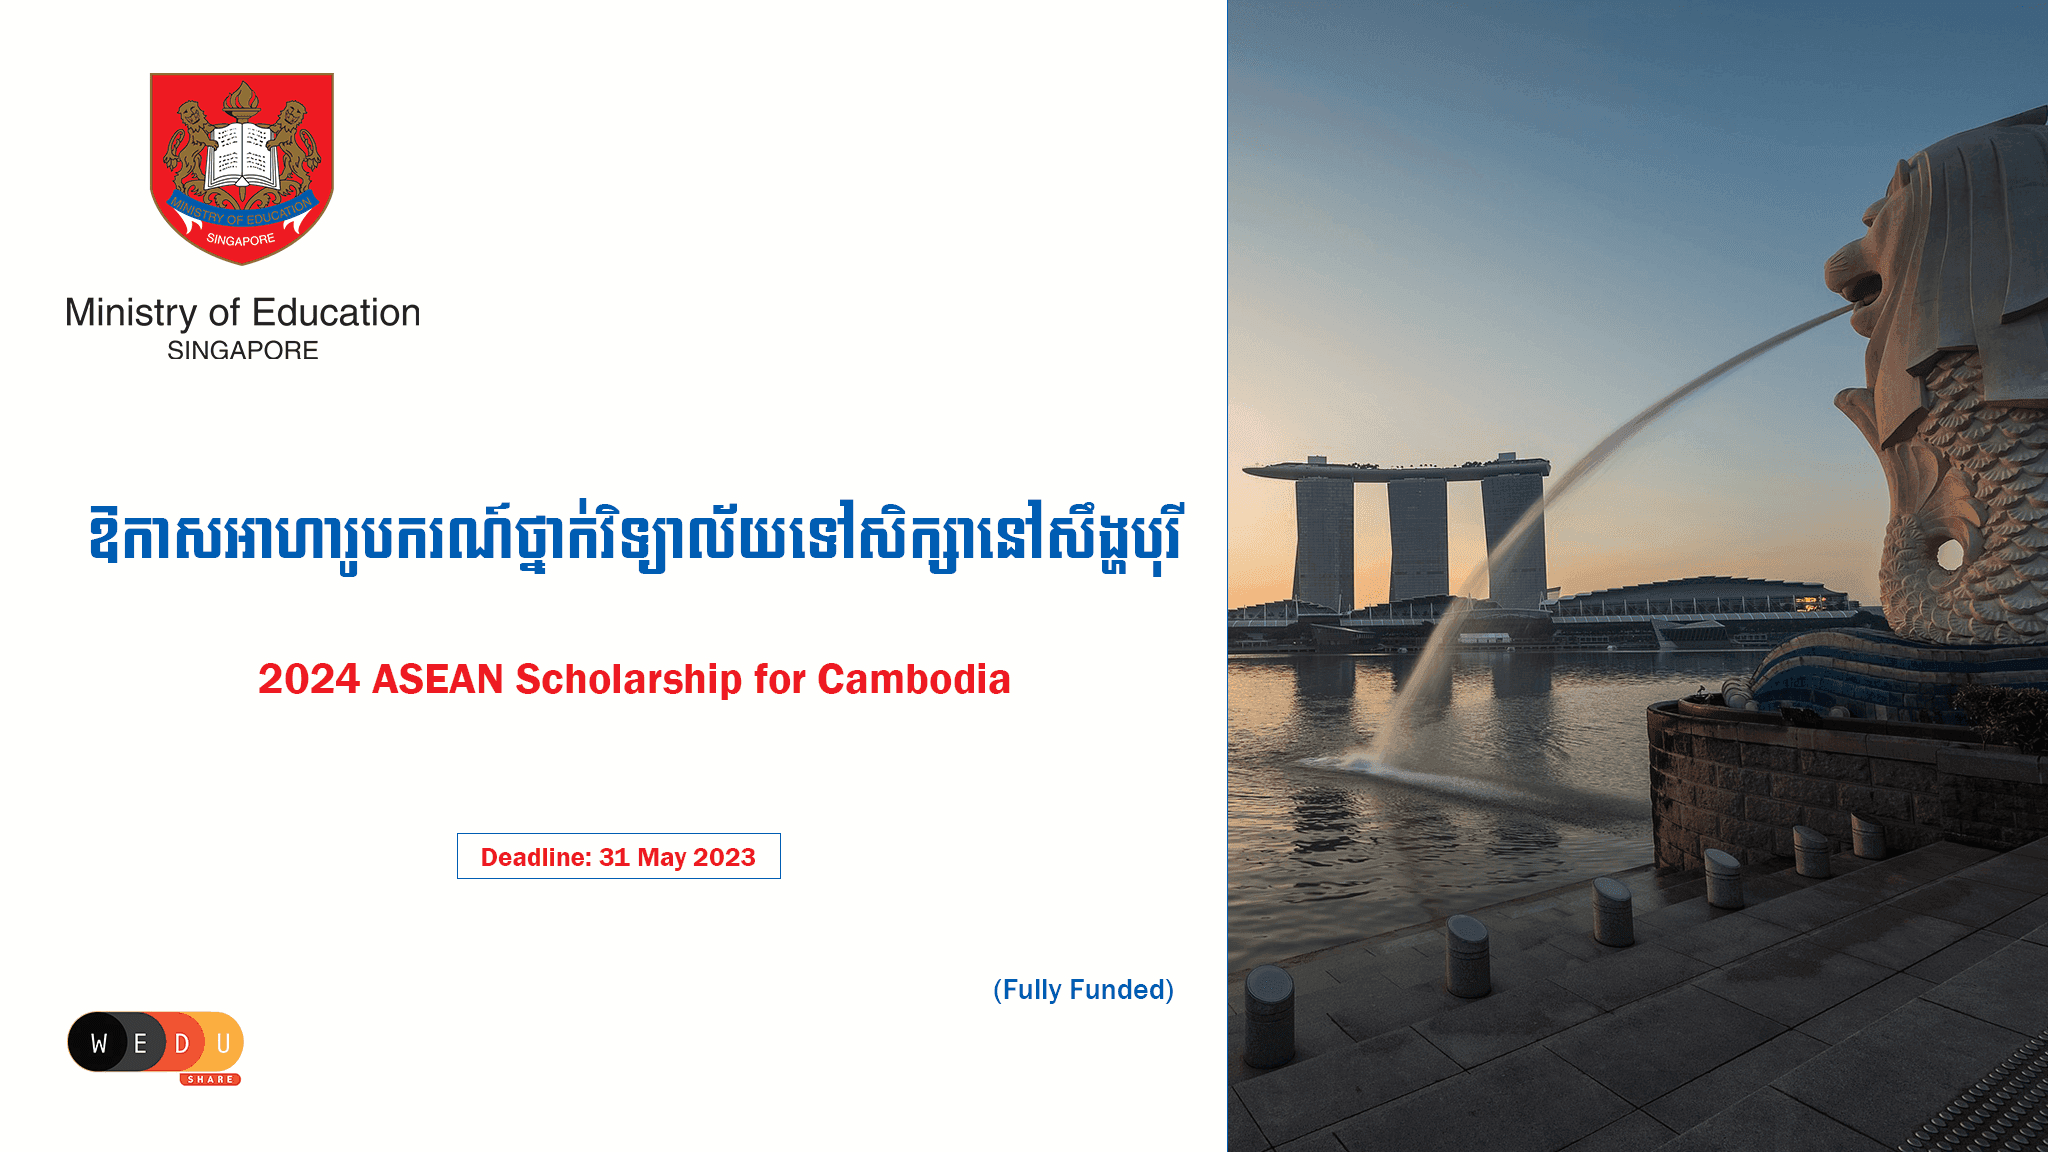 ASEAN Scholarship for Cambodia